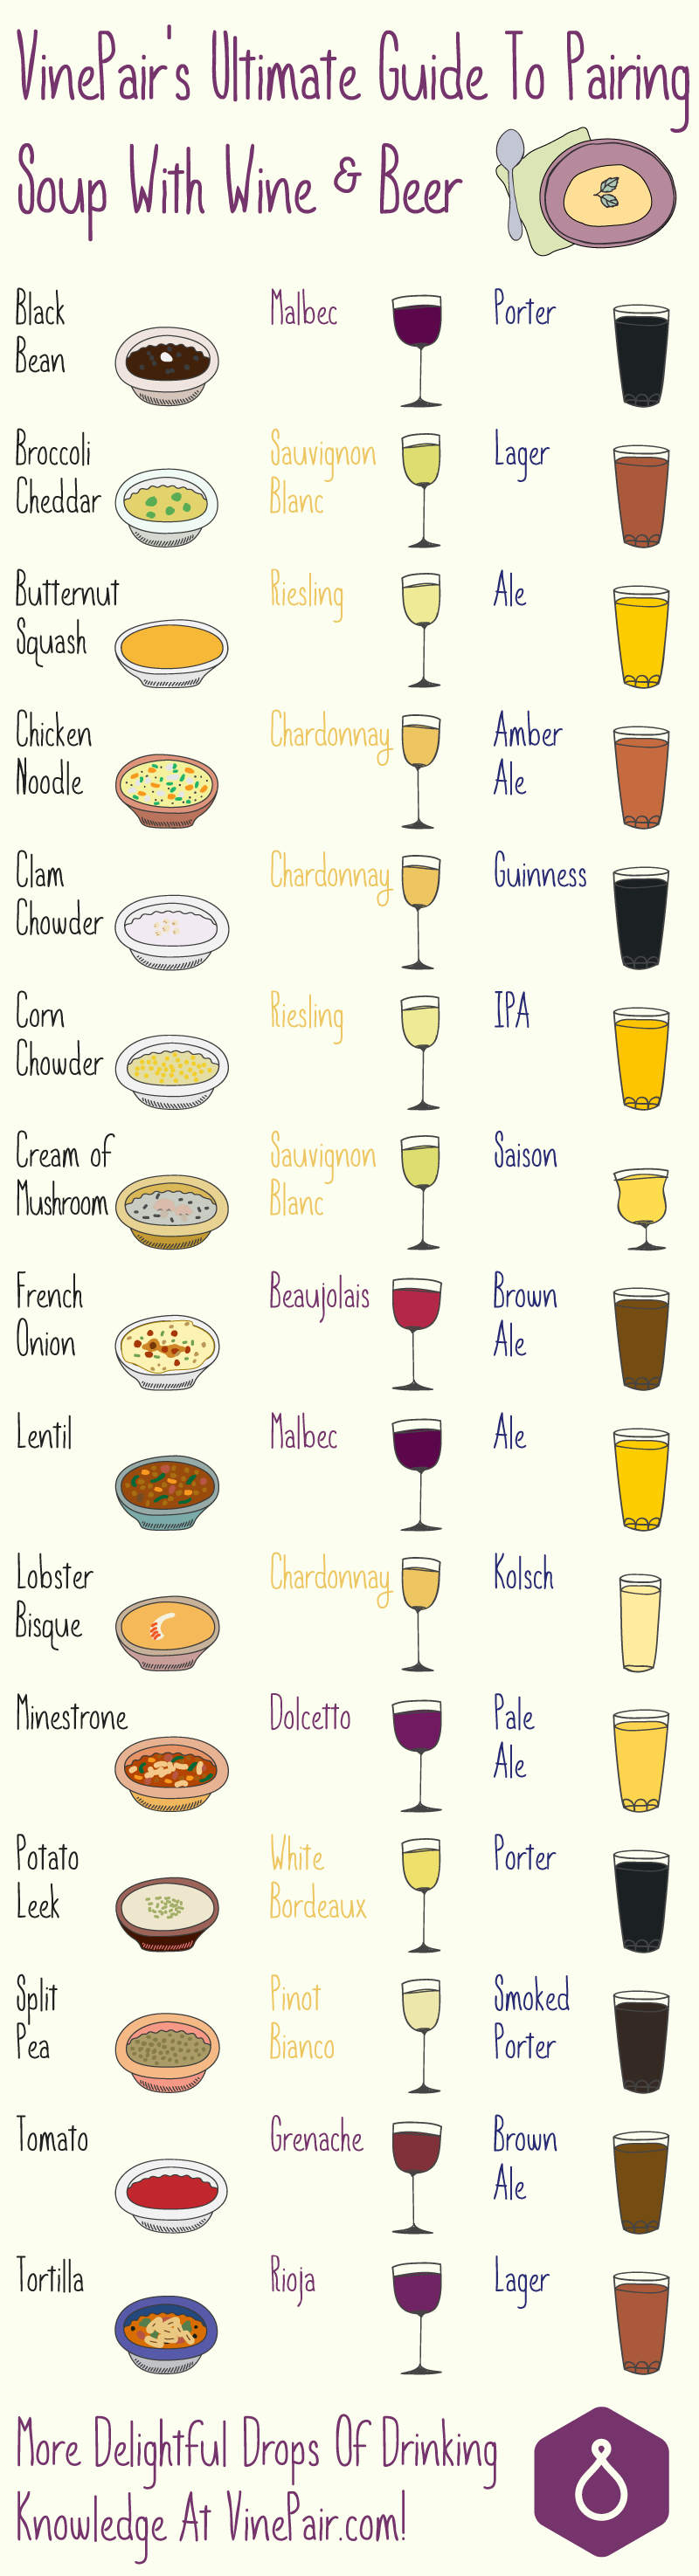 “Soup, Beer and Wine Pairings